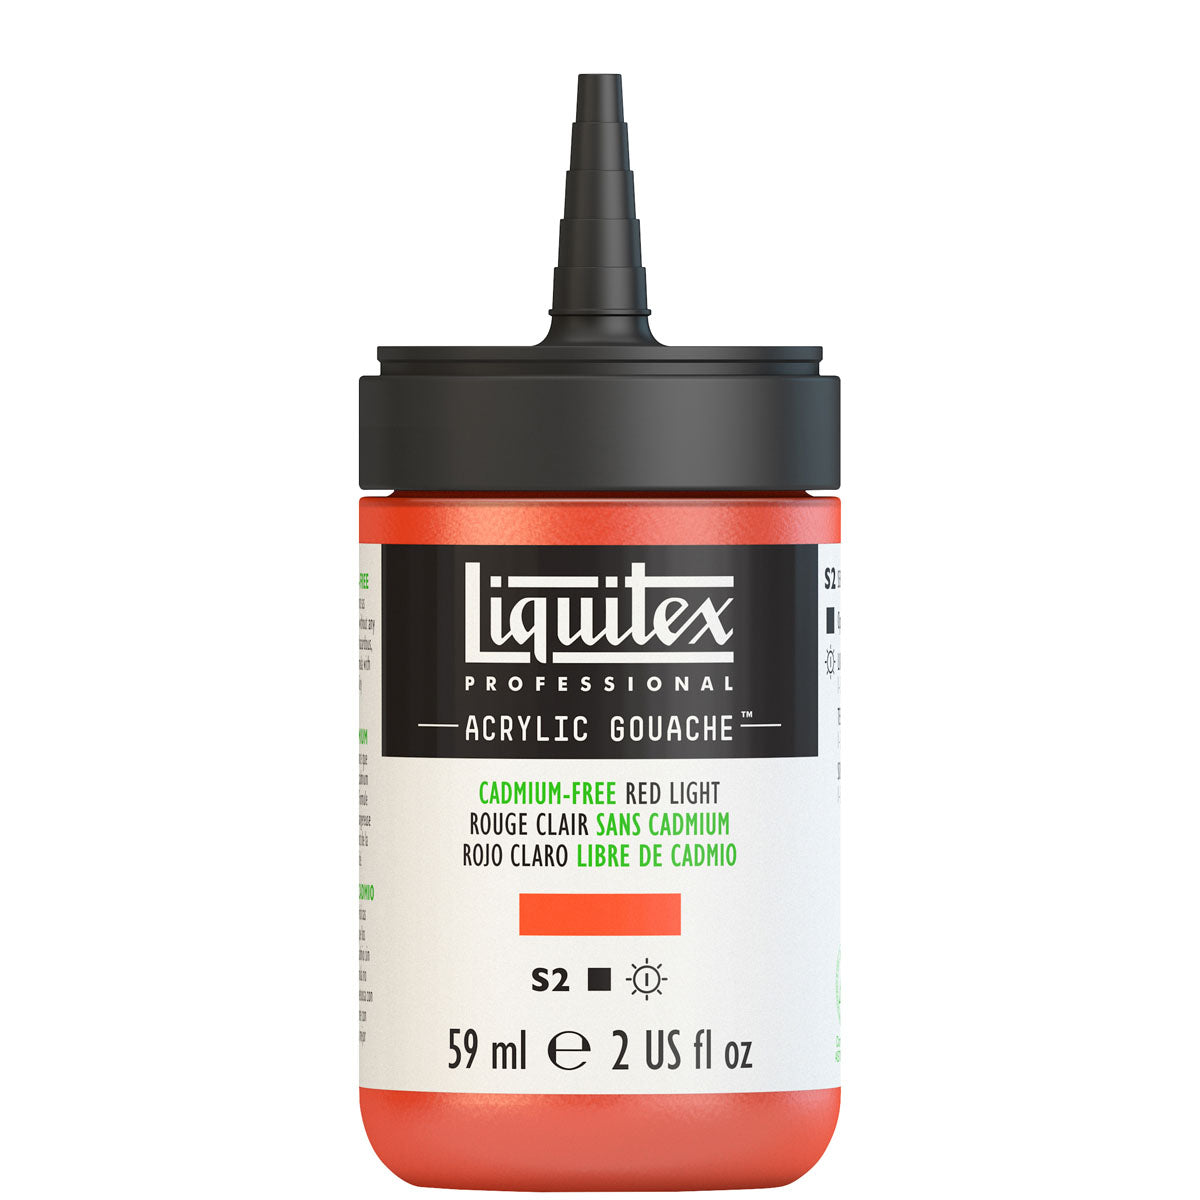 Liquitex - Acrylic Gouache 59ml S2 - Cadimum-Free Red Light